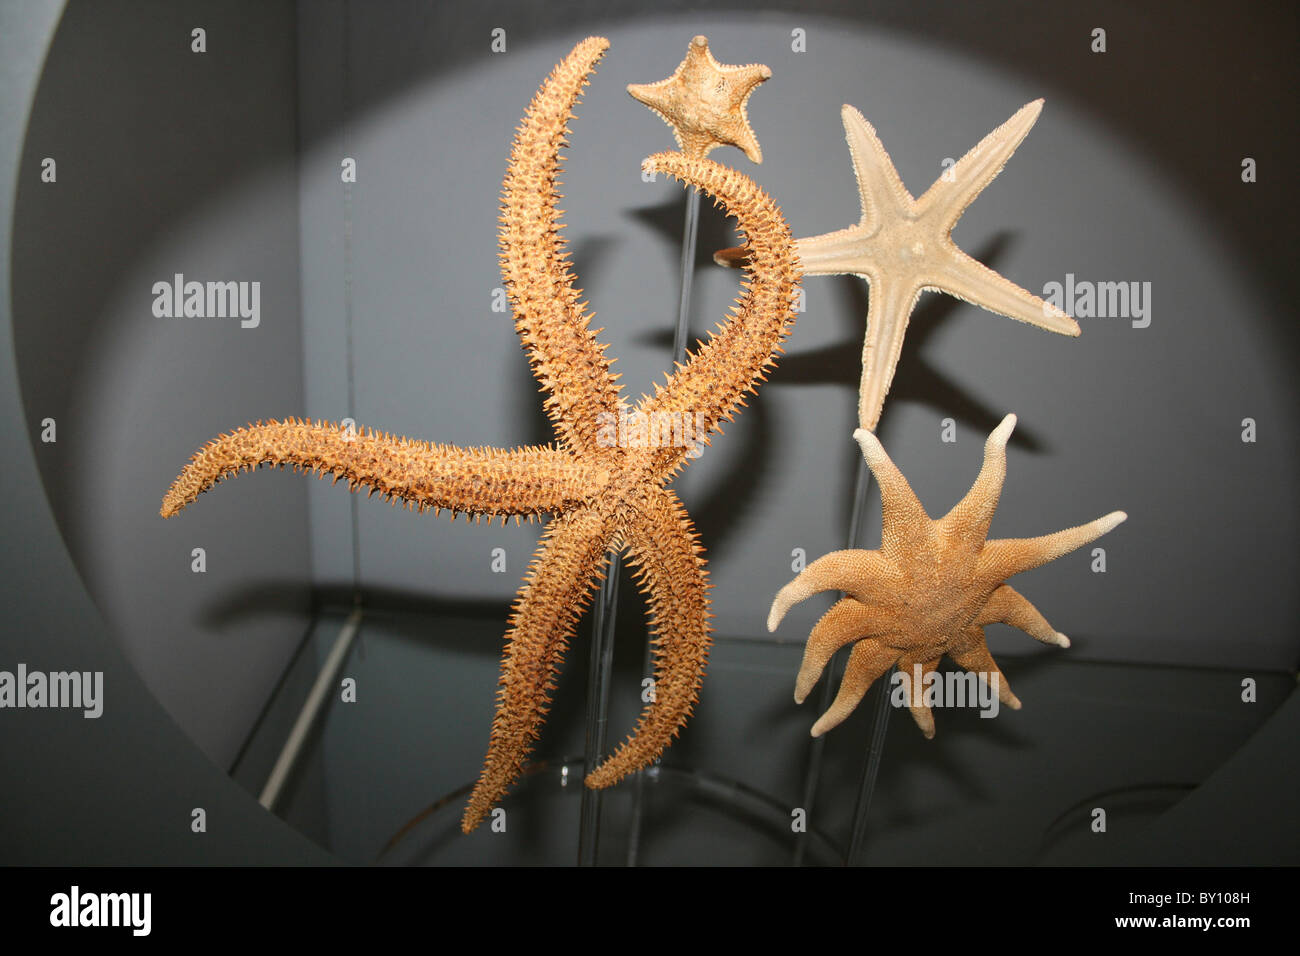 Museum Display Showing Various Starfish Species Stock Photo